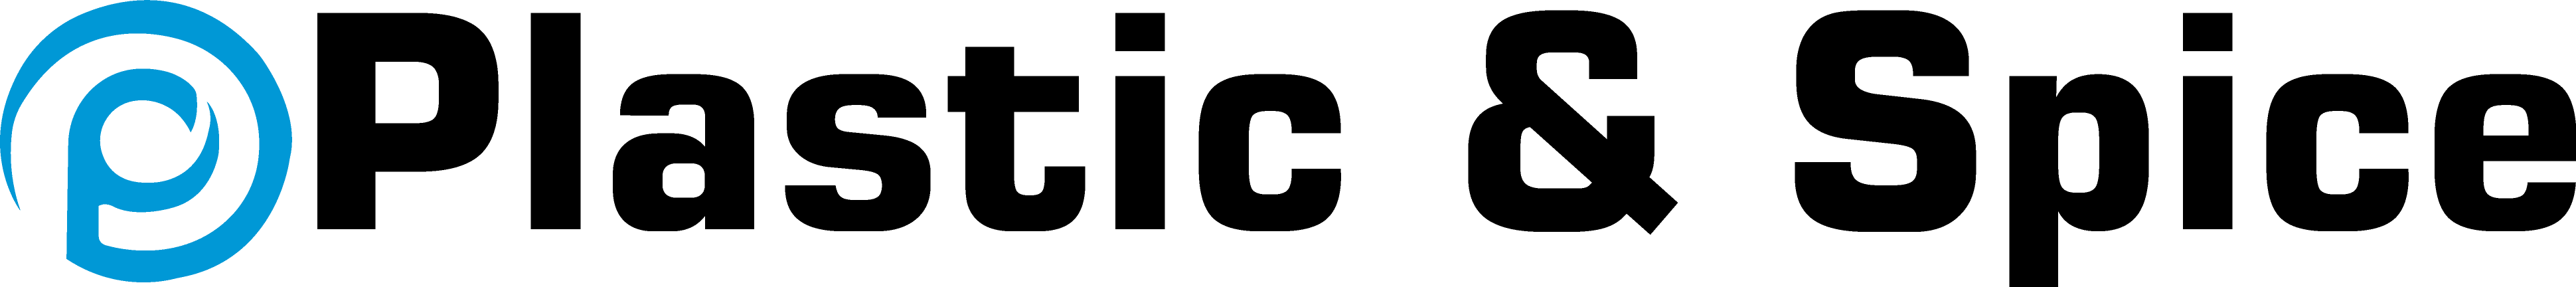 Plastic & Spice logo